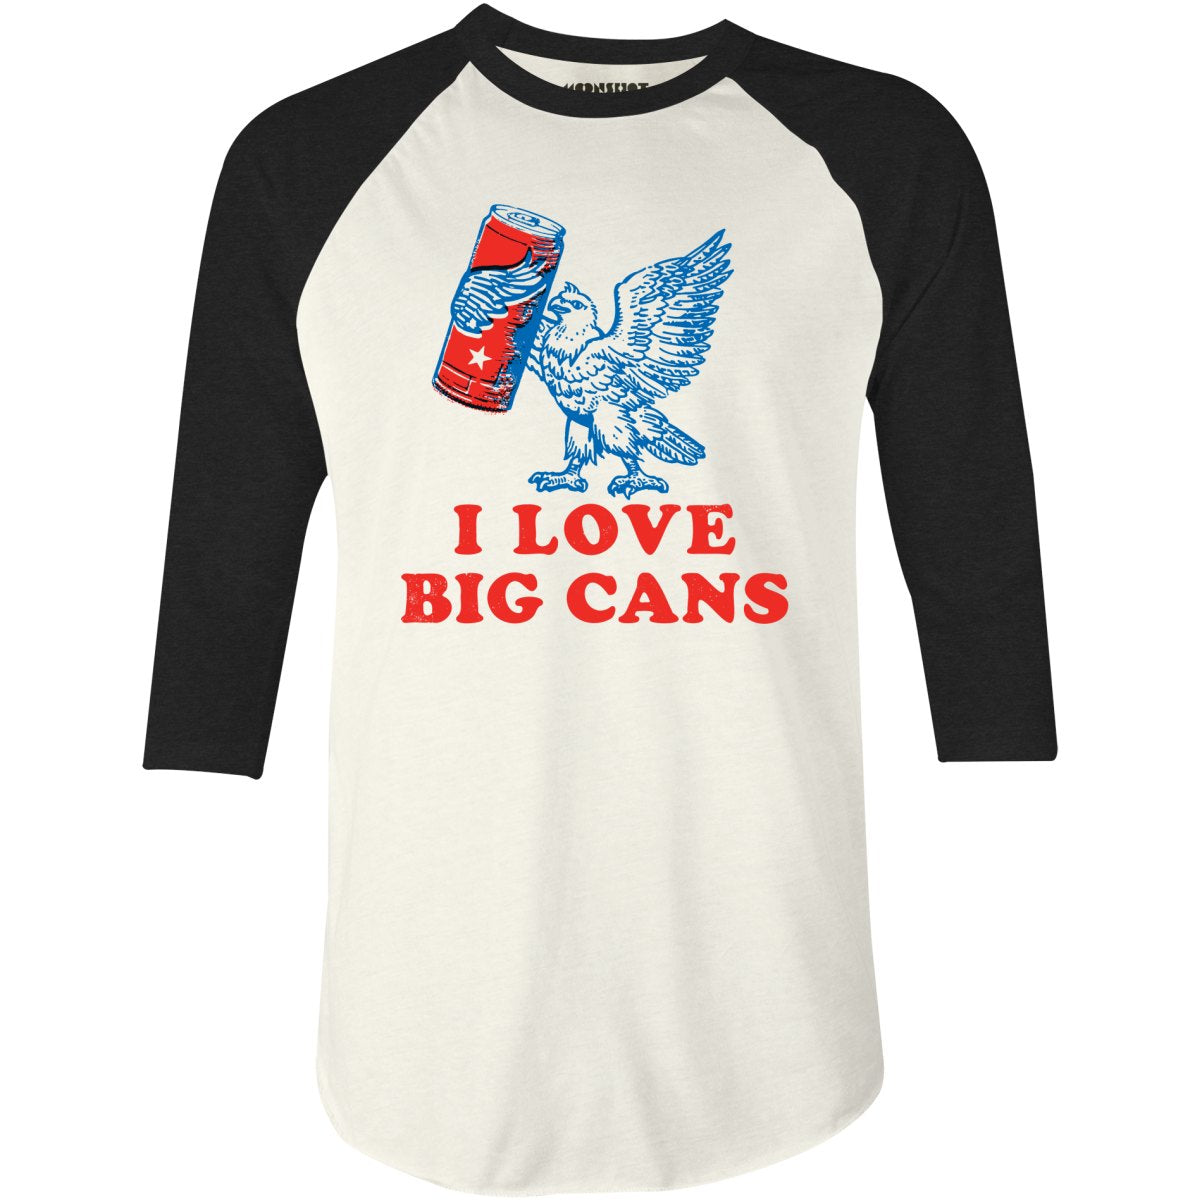 I Love Big Cans - 3/4 Sleeve Raglan T-Shirt